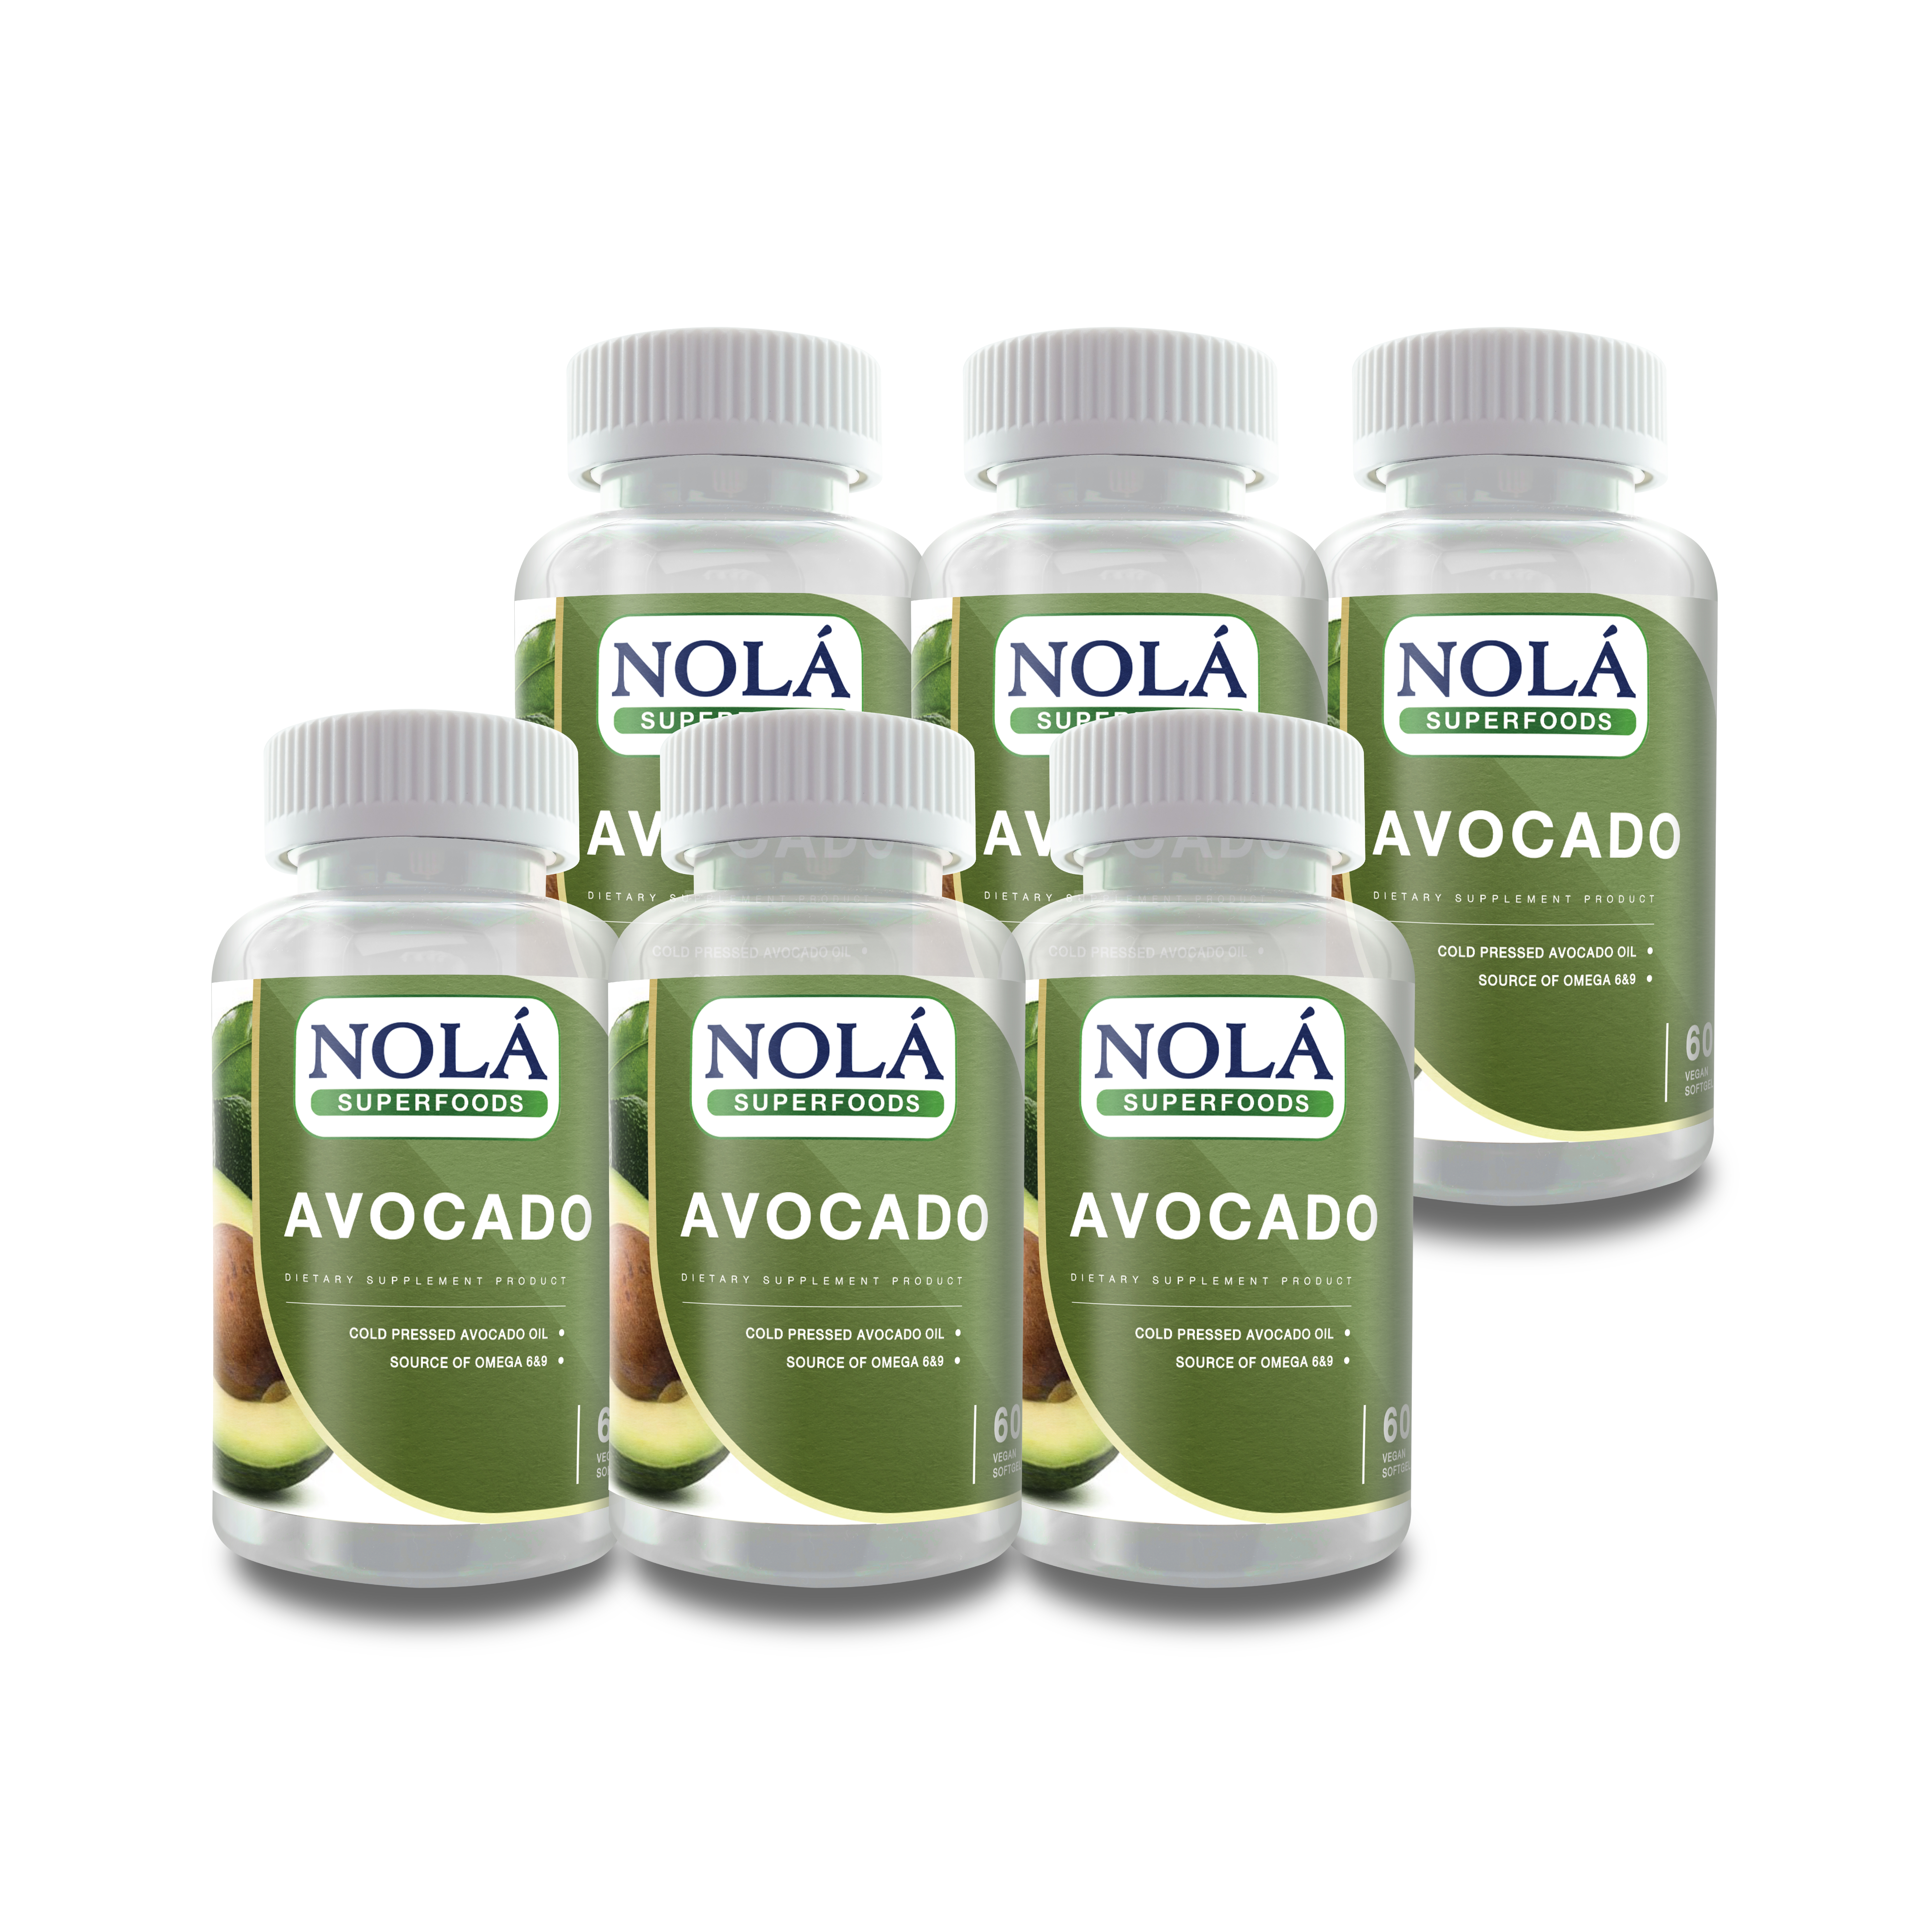 NOLA Avocado 60 vegan soft gels (6 bottles)